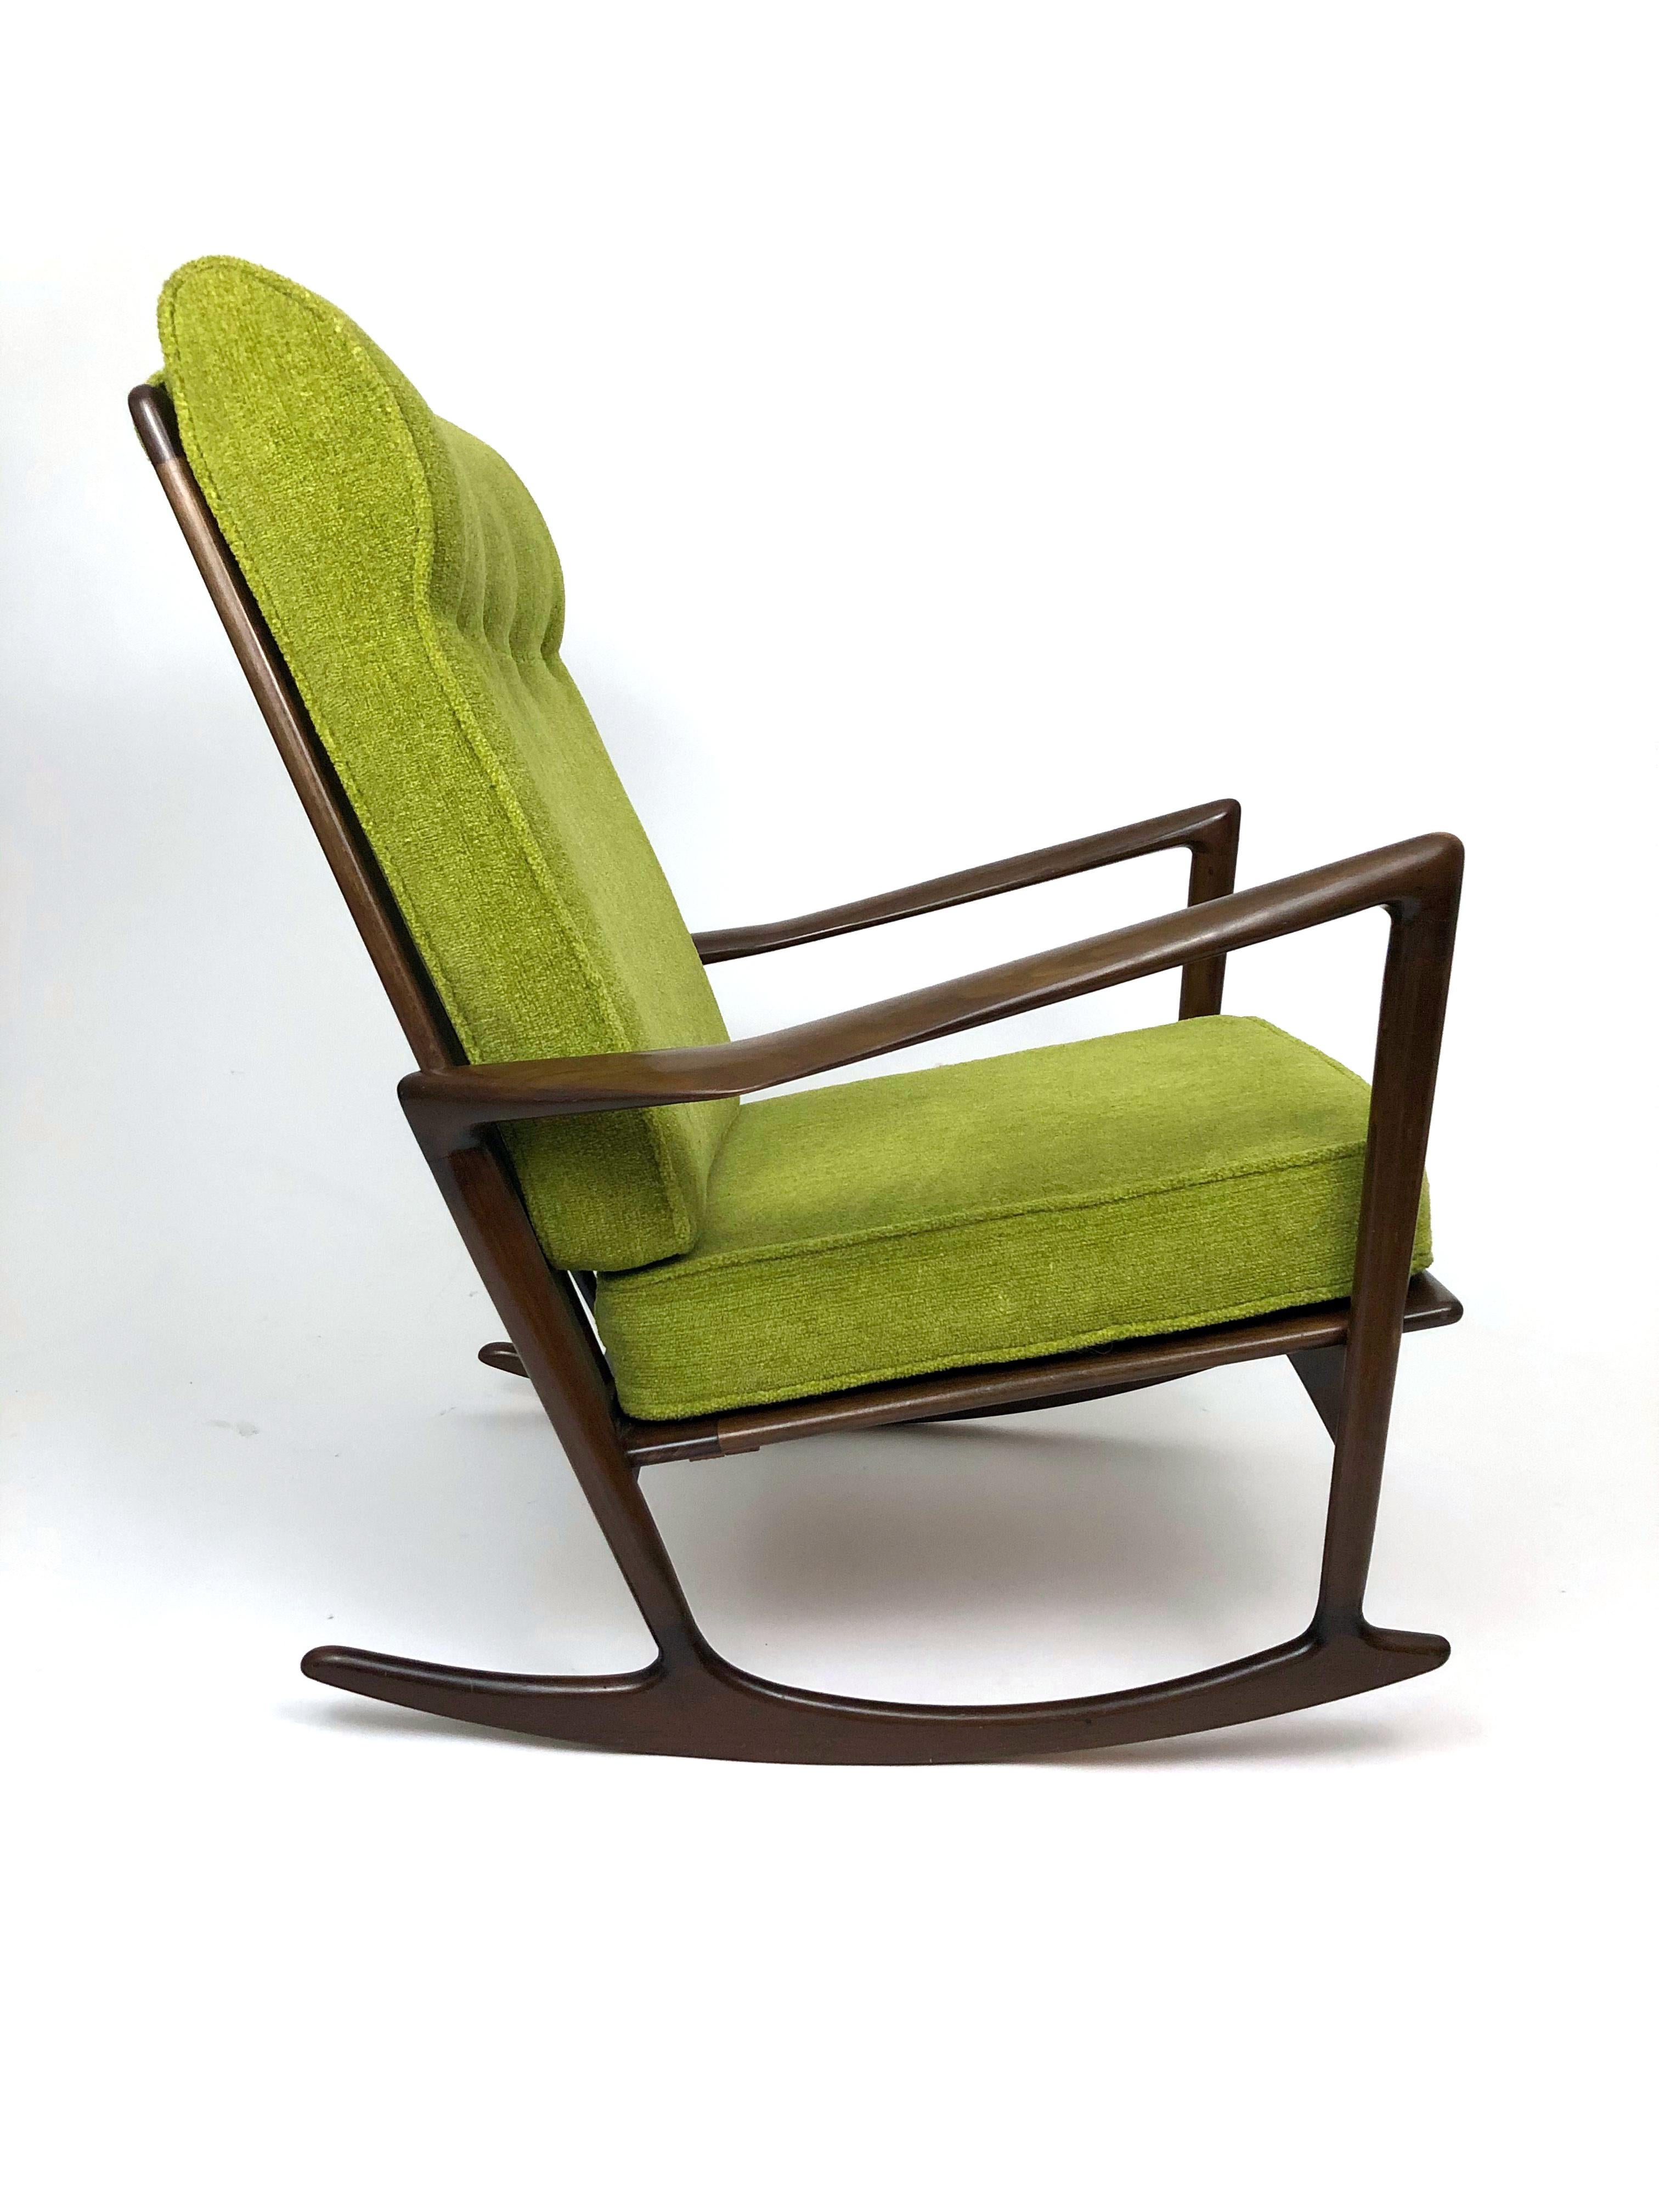 Mid-20th Century Sculptural Walnut Rocking Chair by Ib Kofod-Larsen